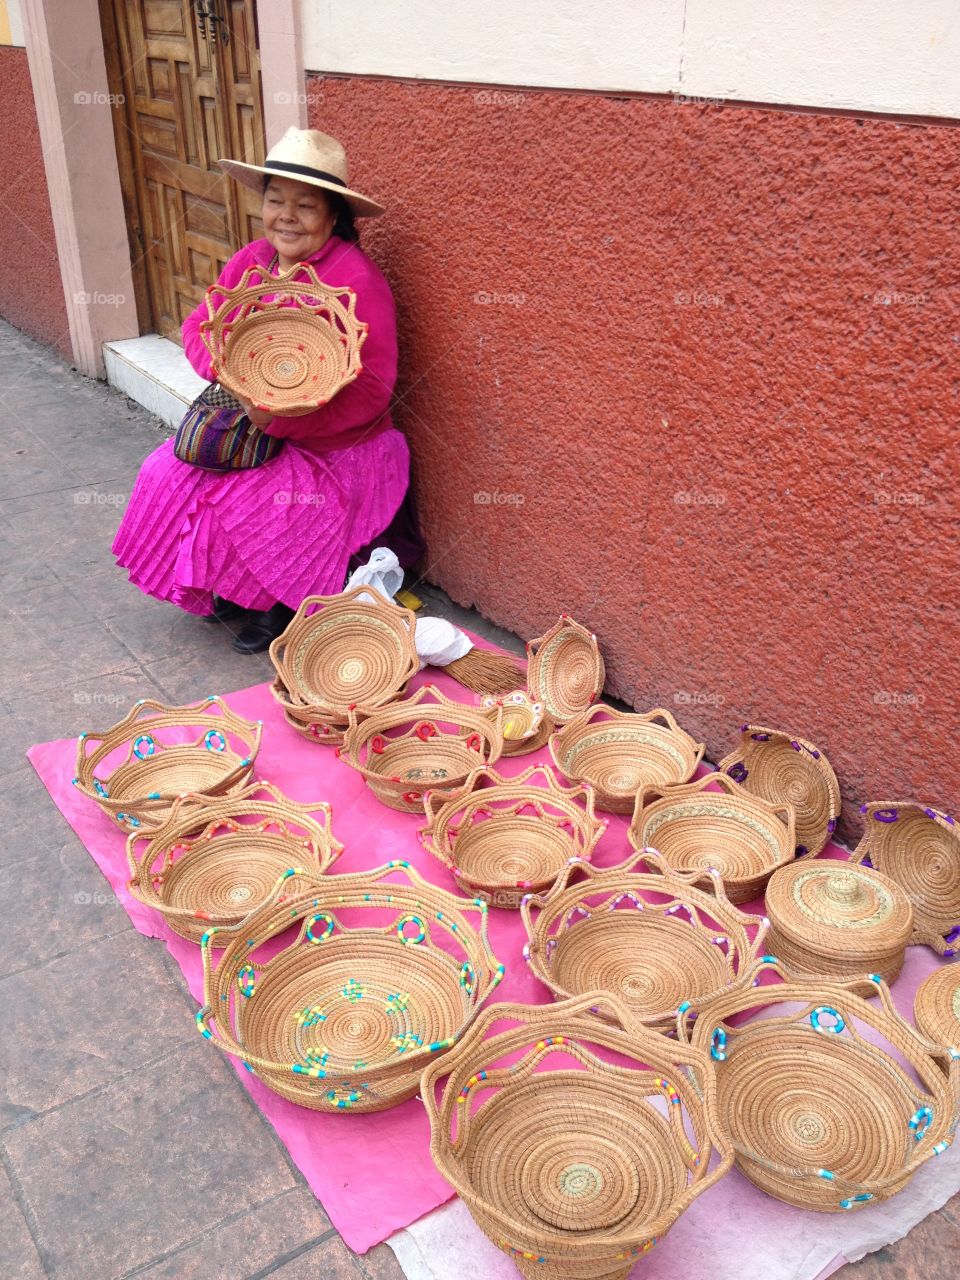 Hand made baskets